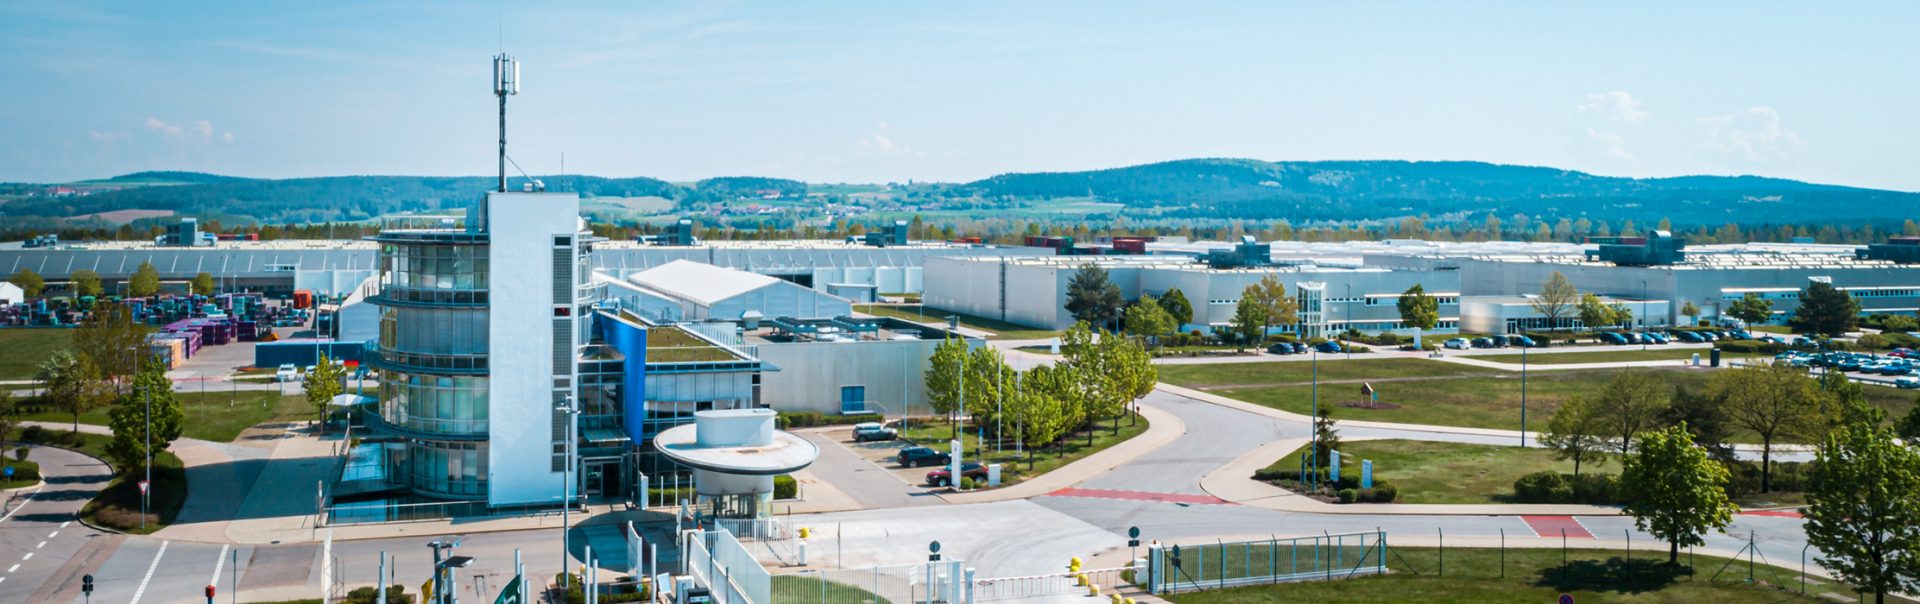 BMW Plant Wackersdorf aerial view